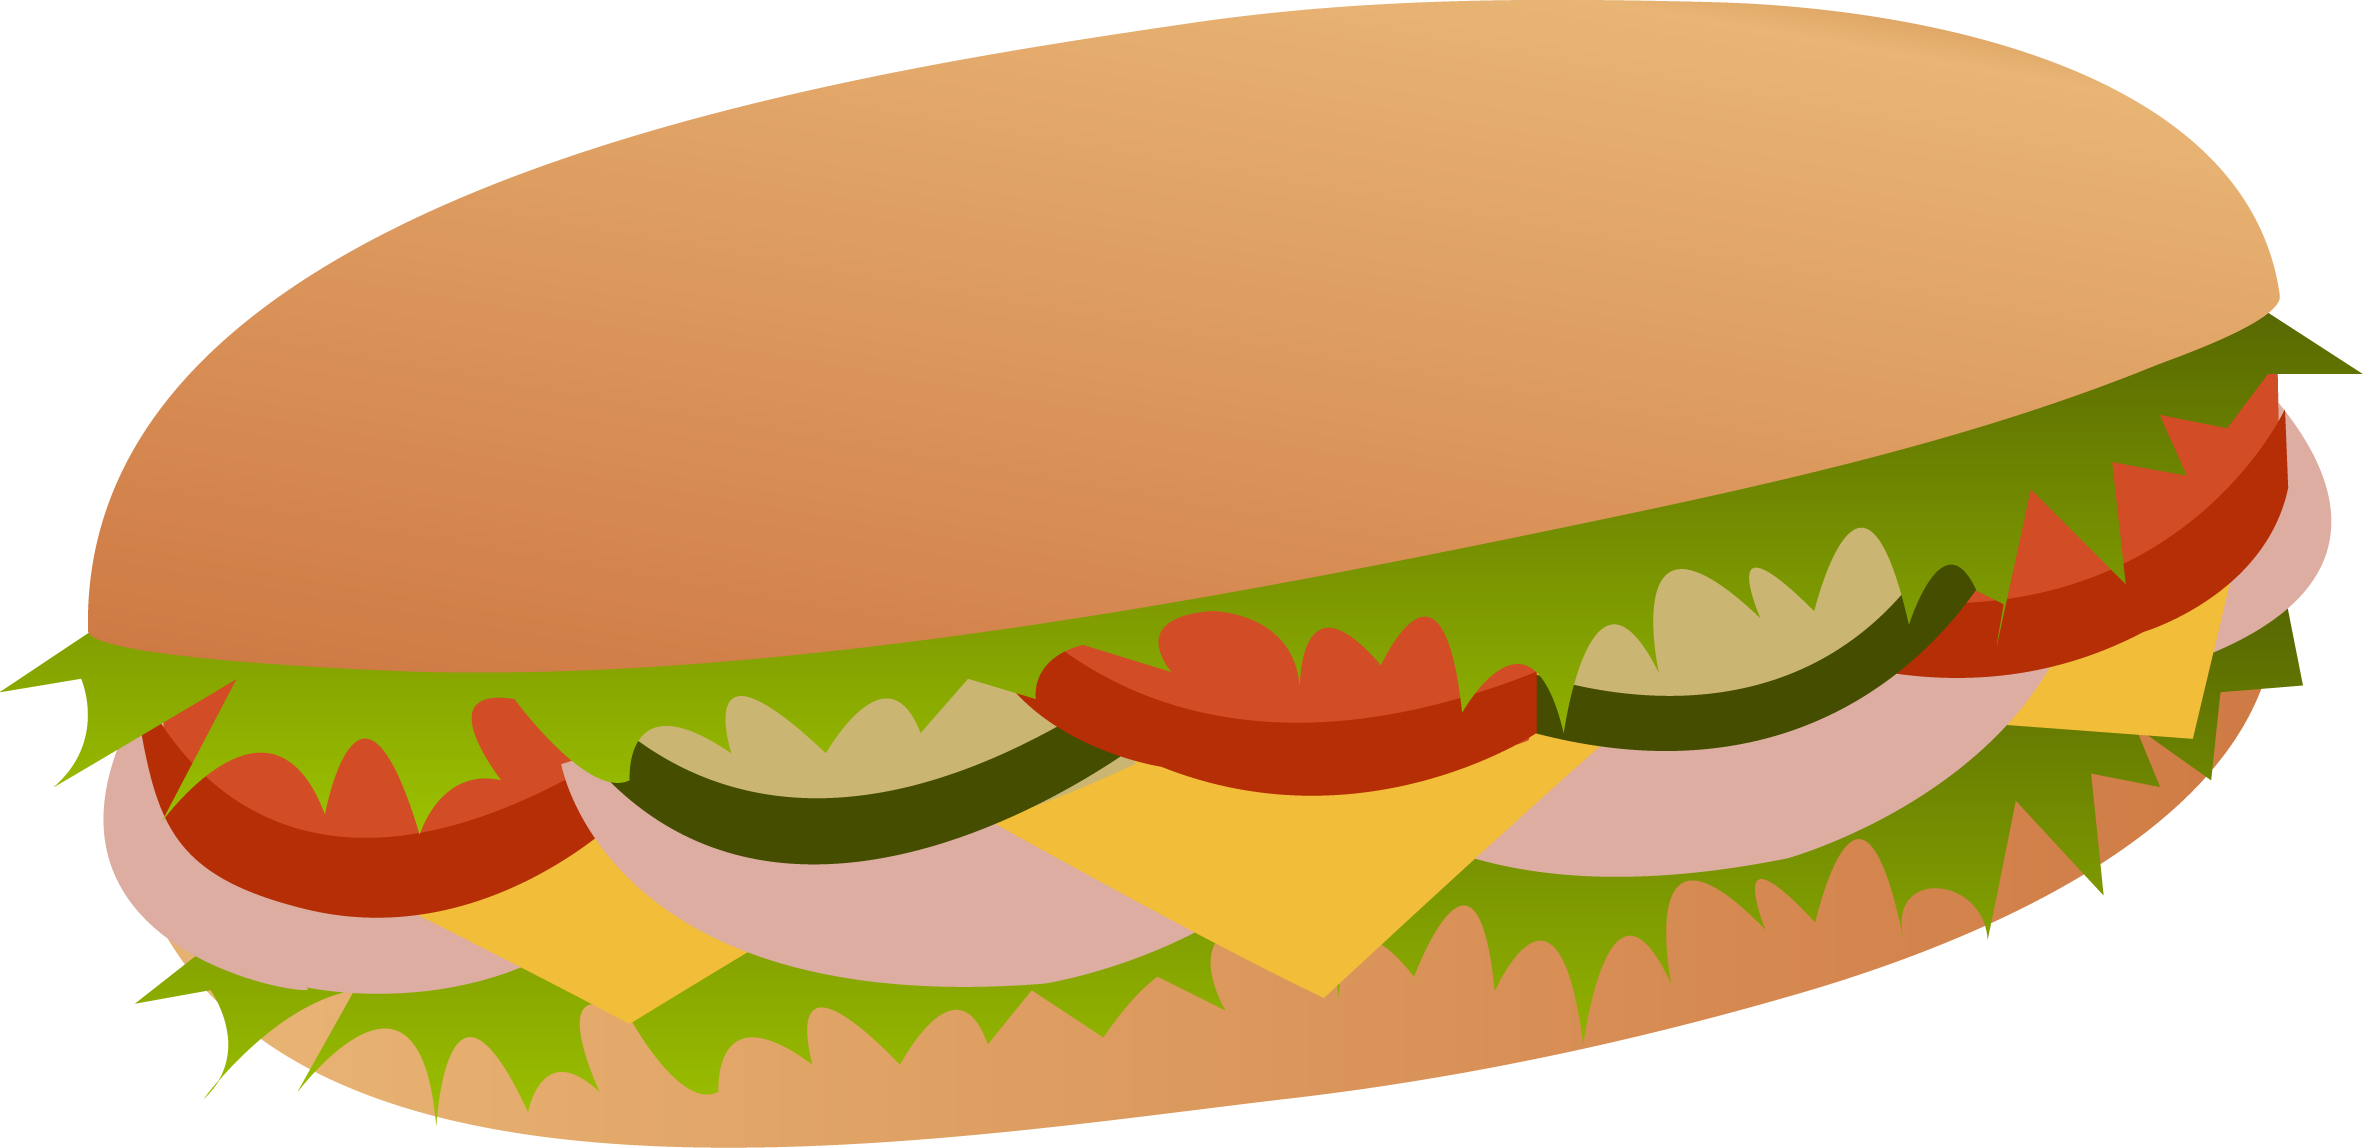 Sub Sandwich Clip Art.